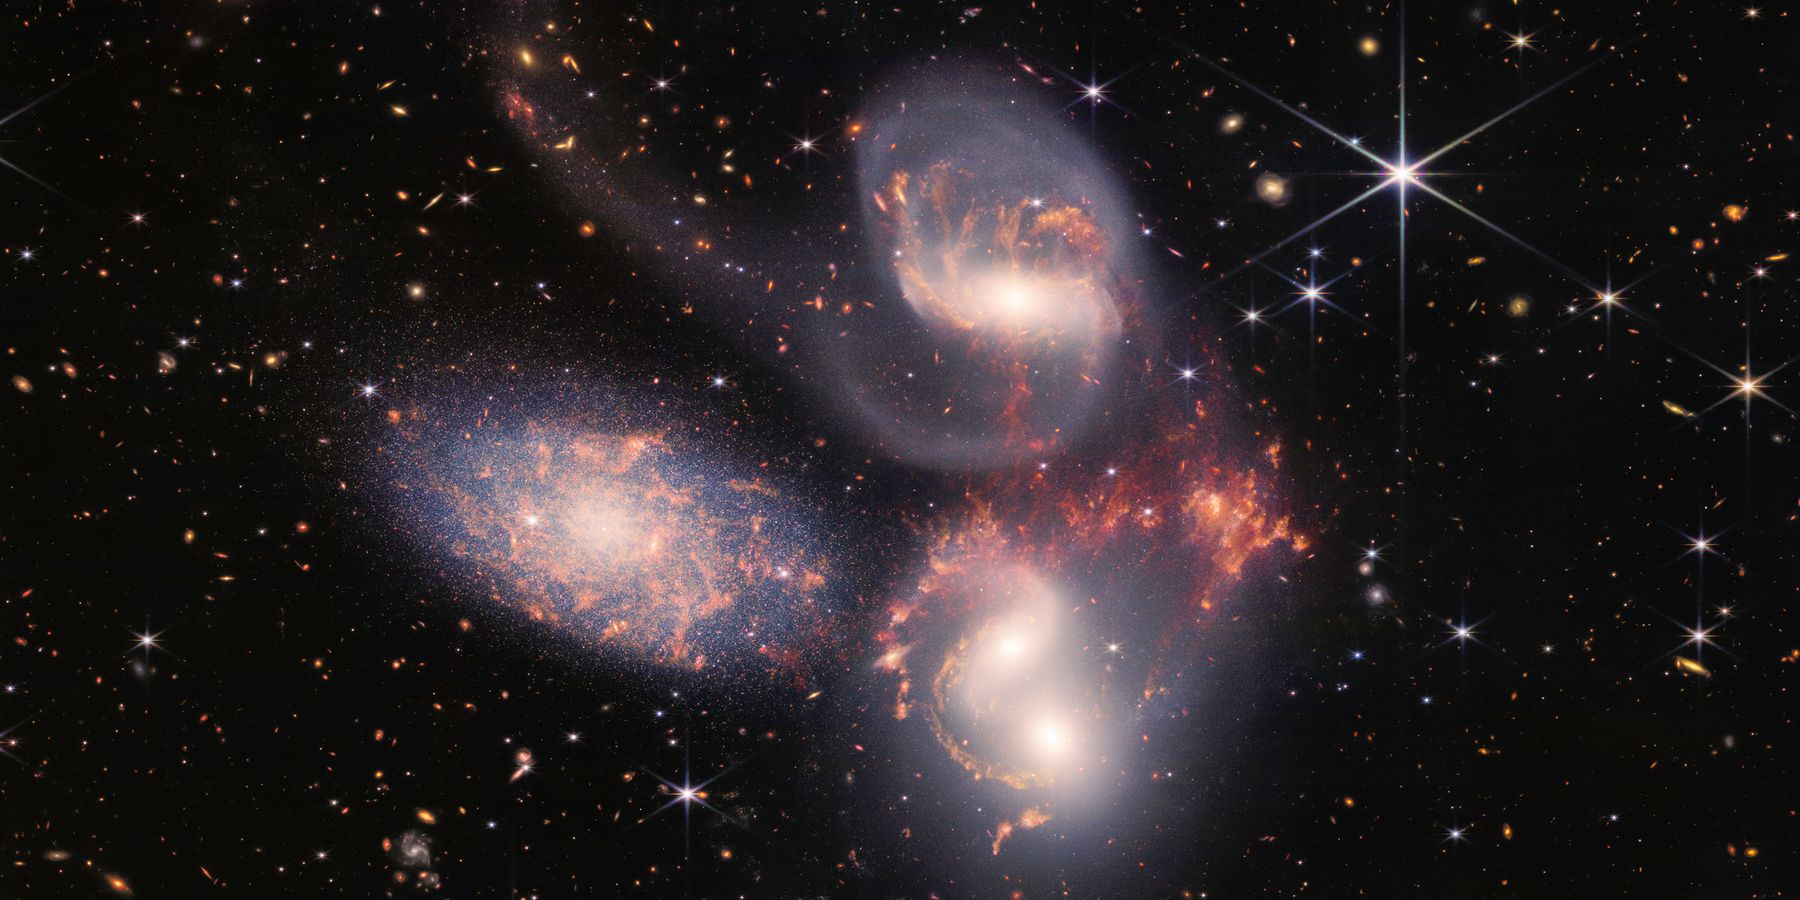 image of Stephans Quintet captured by webb telescope